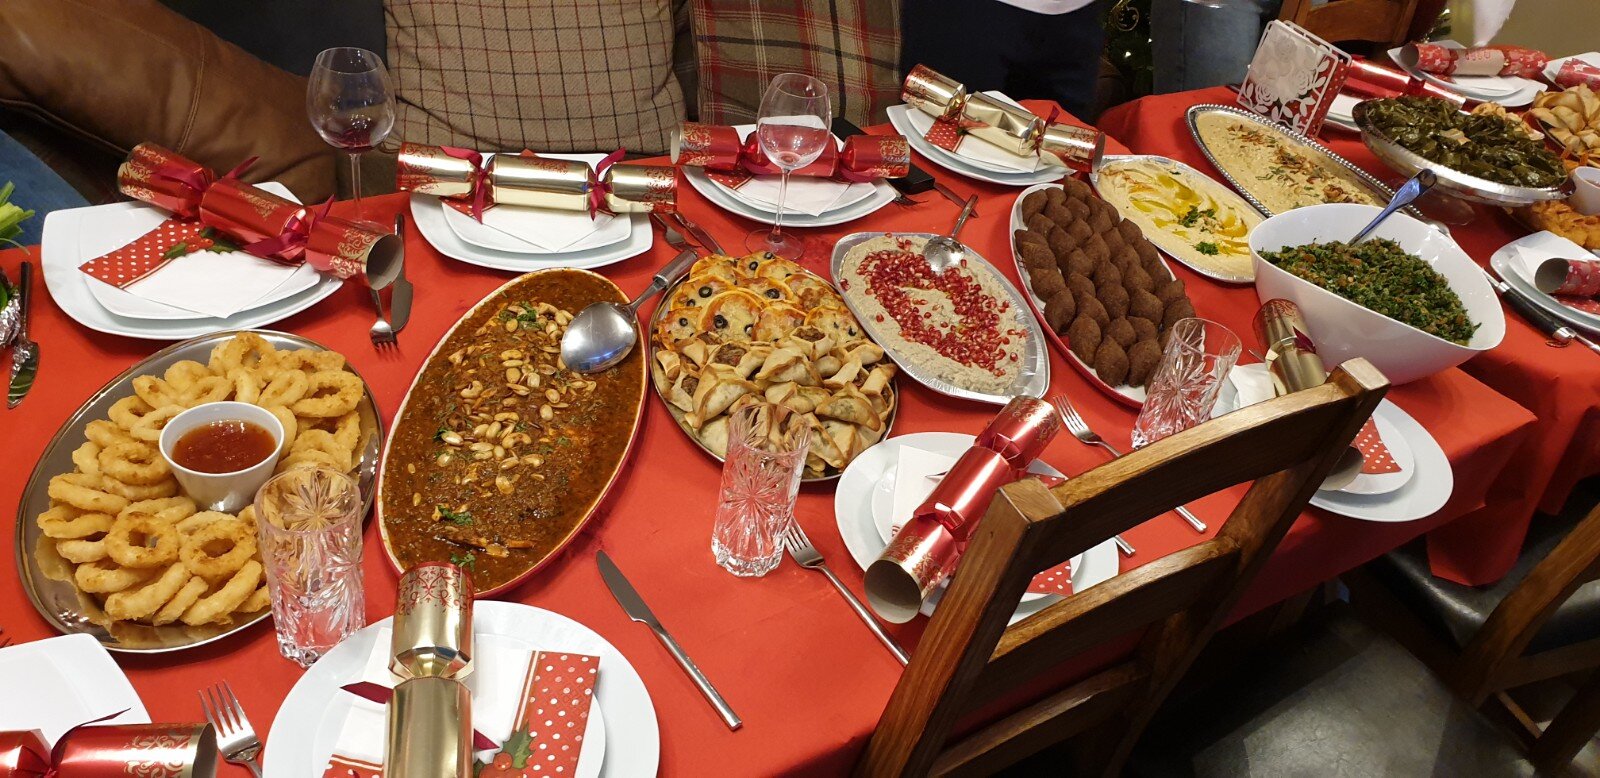 The amazing Lebanese Christmas banquet Nicol's mum and relatives cook. Photo: Nicol Lamaa